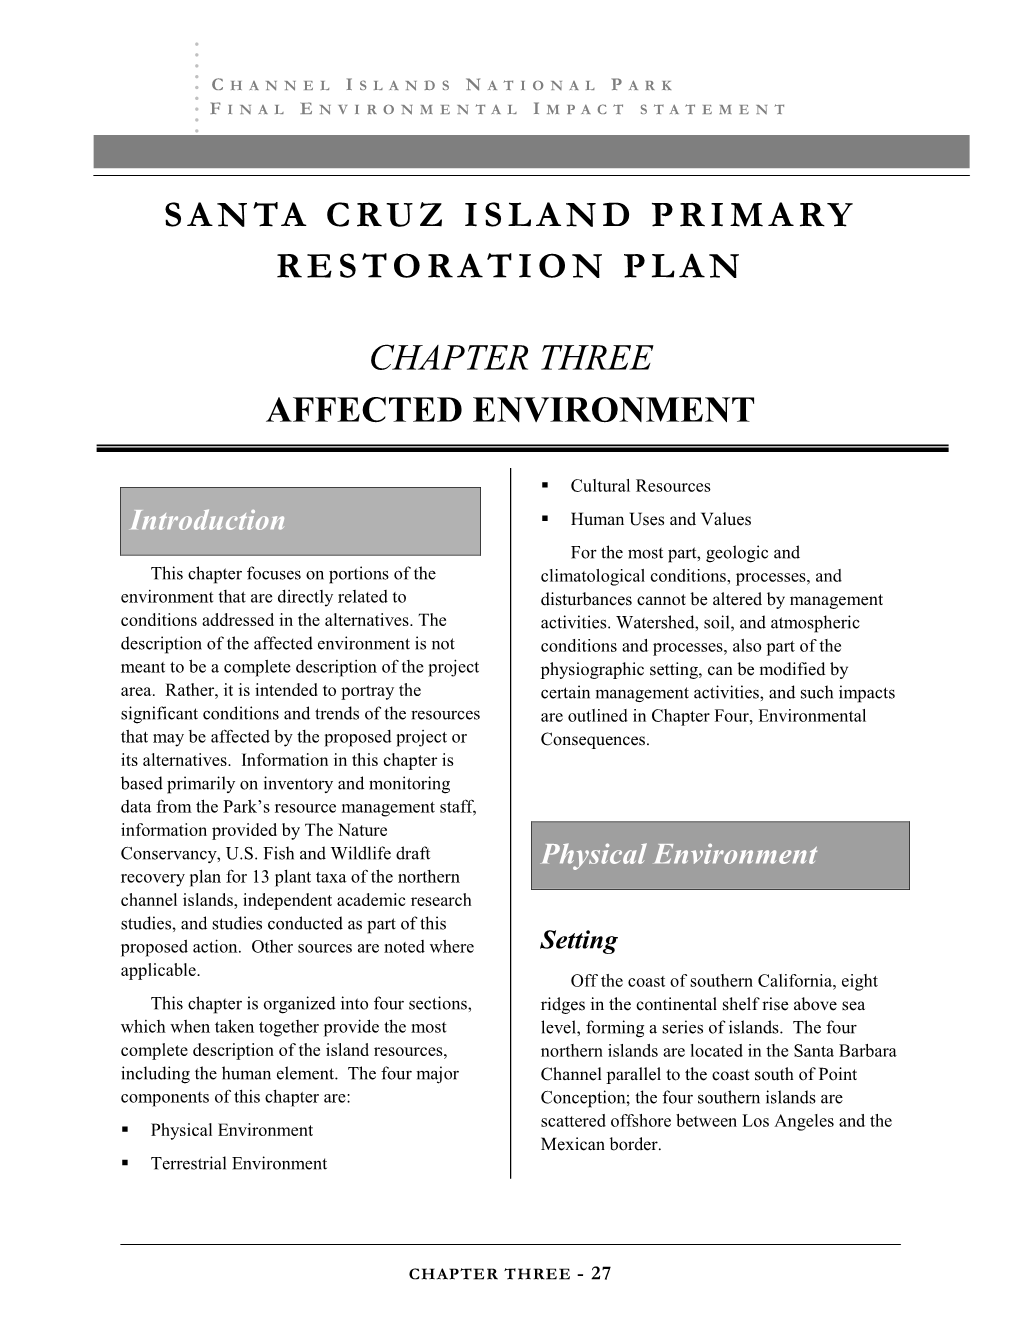 Santa Cruz Island Vegetation Confined to the Eastern 10% of Santa Cruz Island